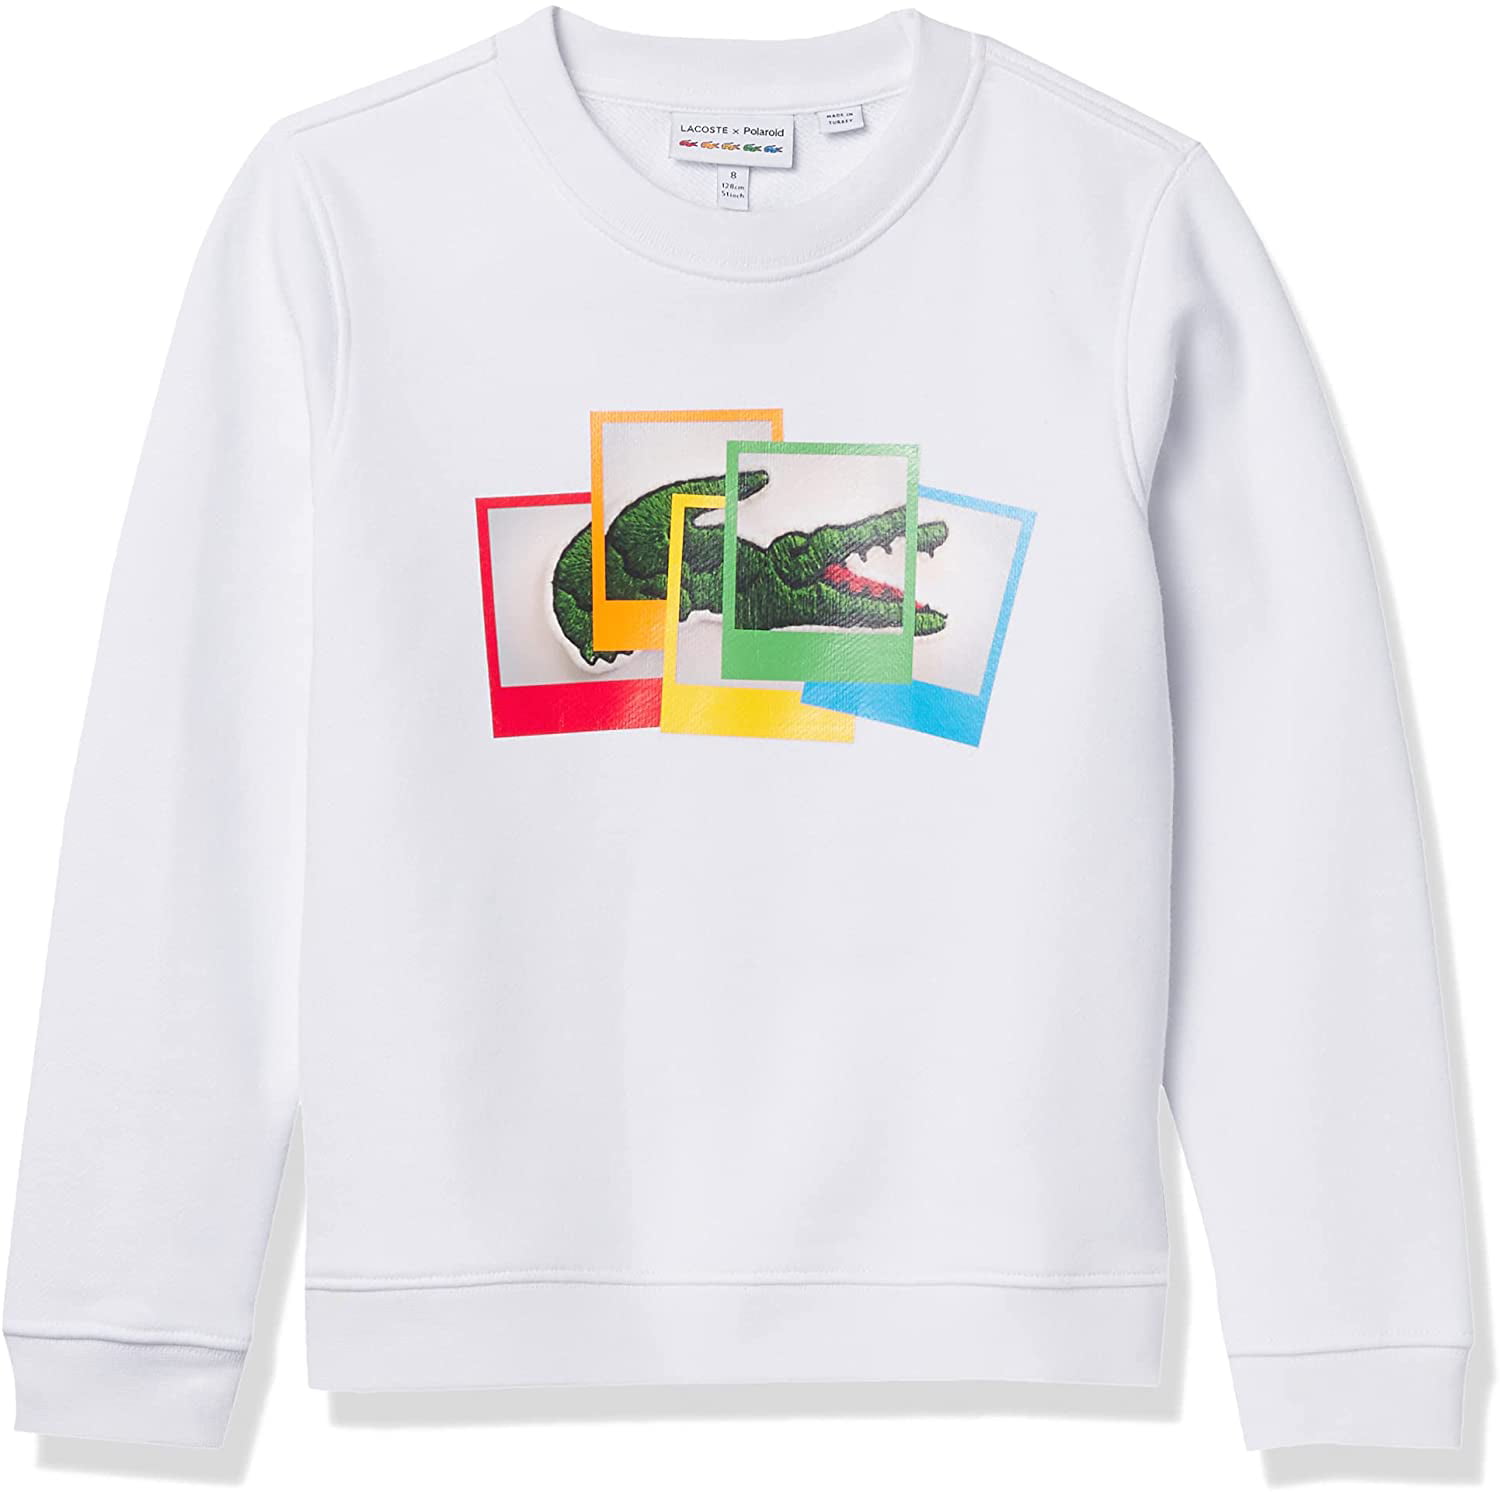 Lacoste Boy's Long Sleeve Holiday Croc Crewneck Sweatshirt